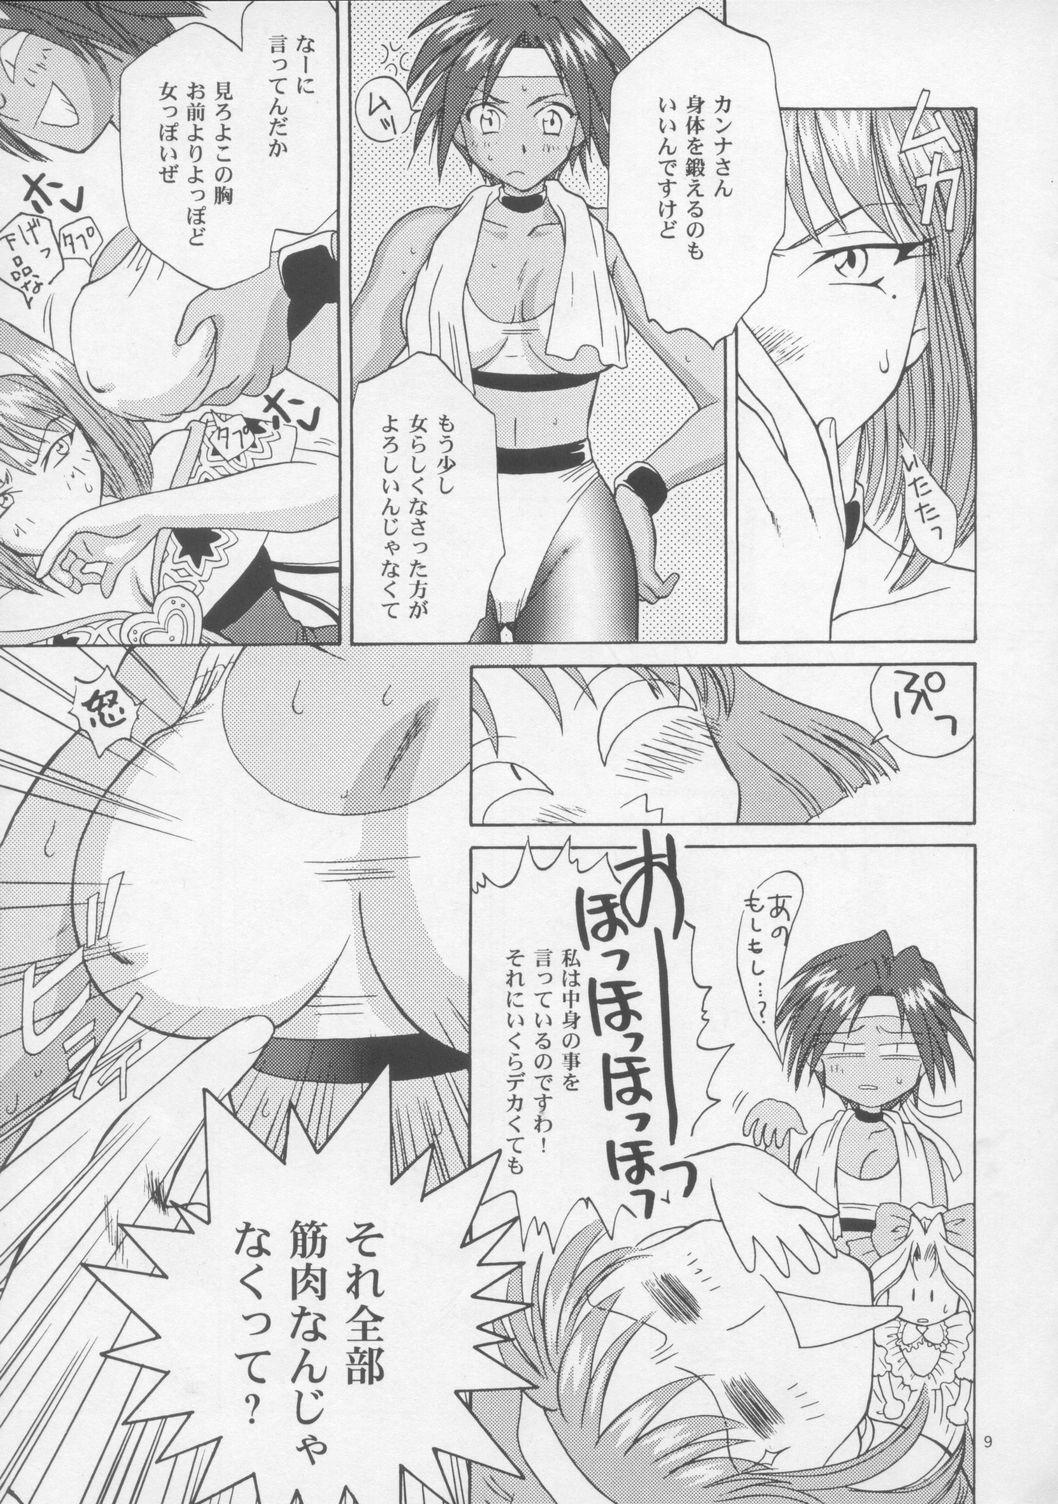 Gostosas Woman - Sakura taisen Nudes - Page 8